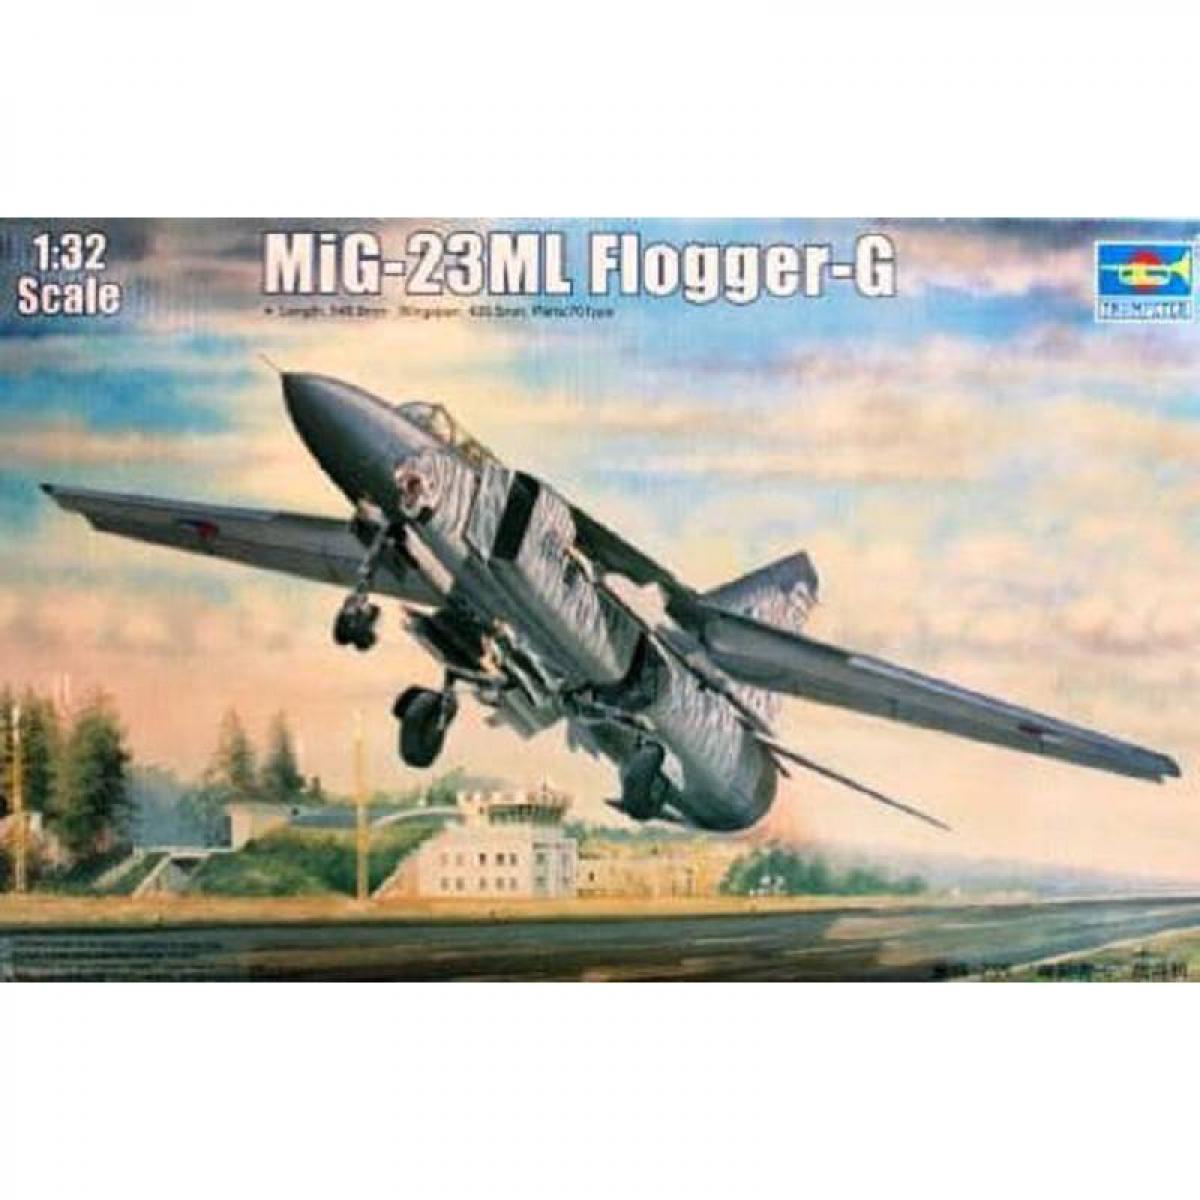 Trumpeter - Maquette Avion Mig-23ml Flogger-g - Avions